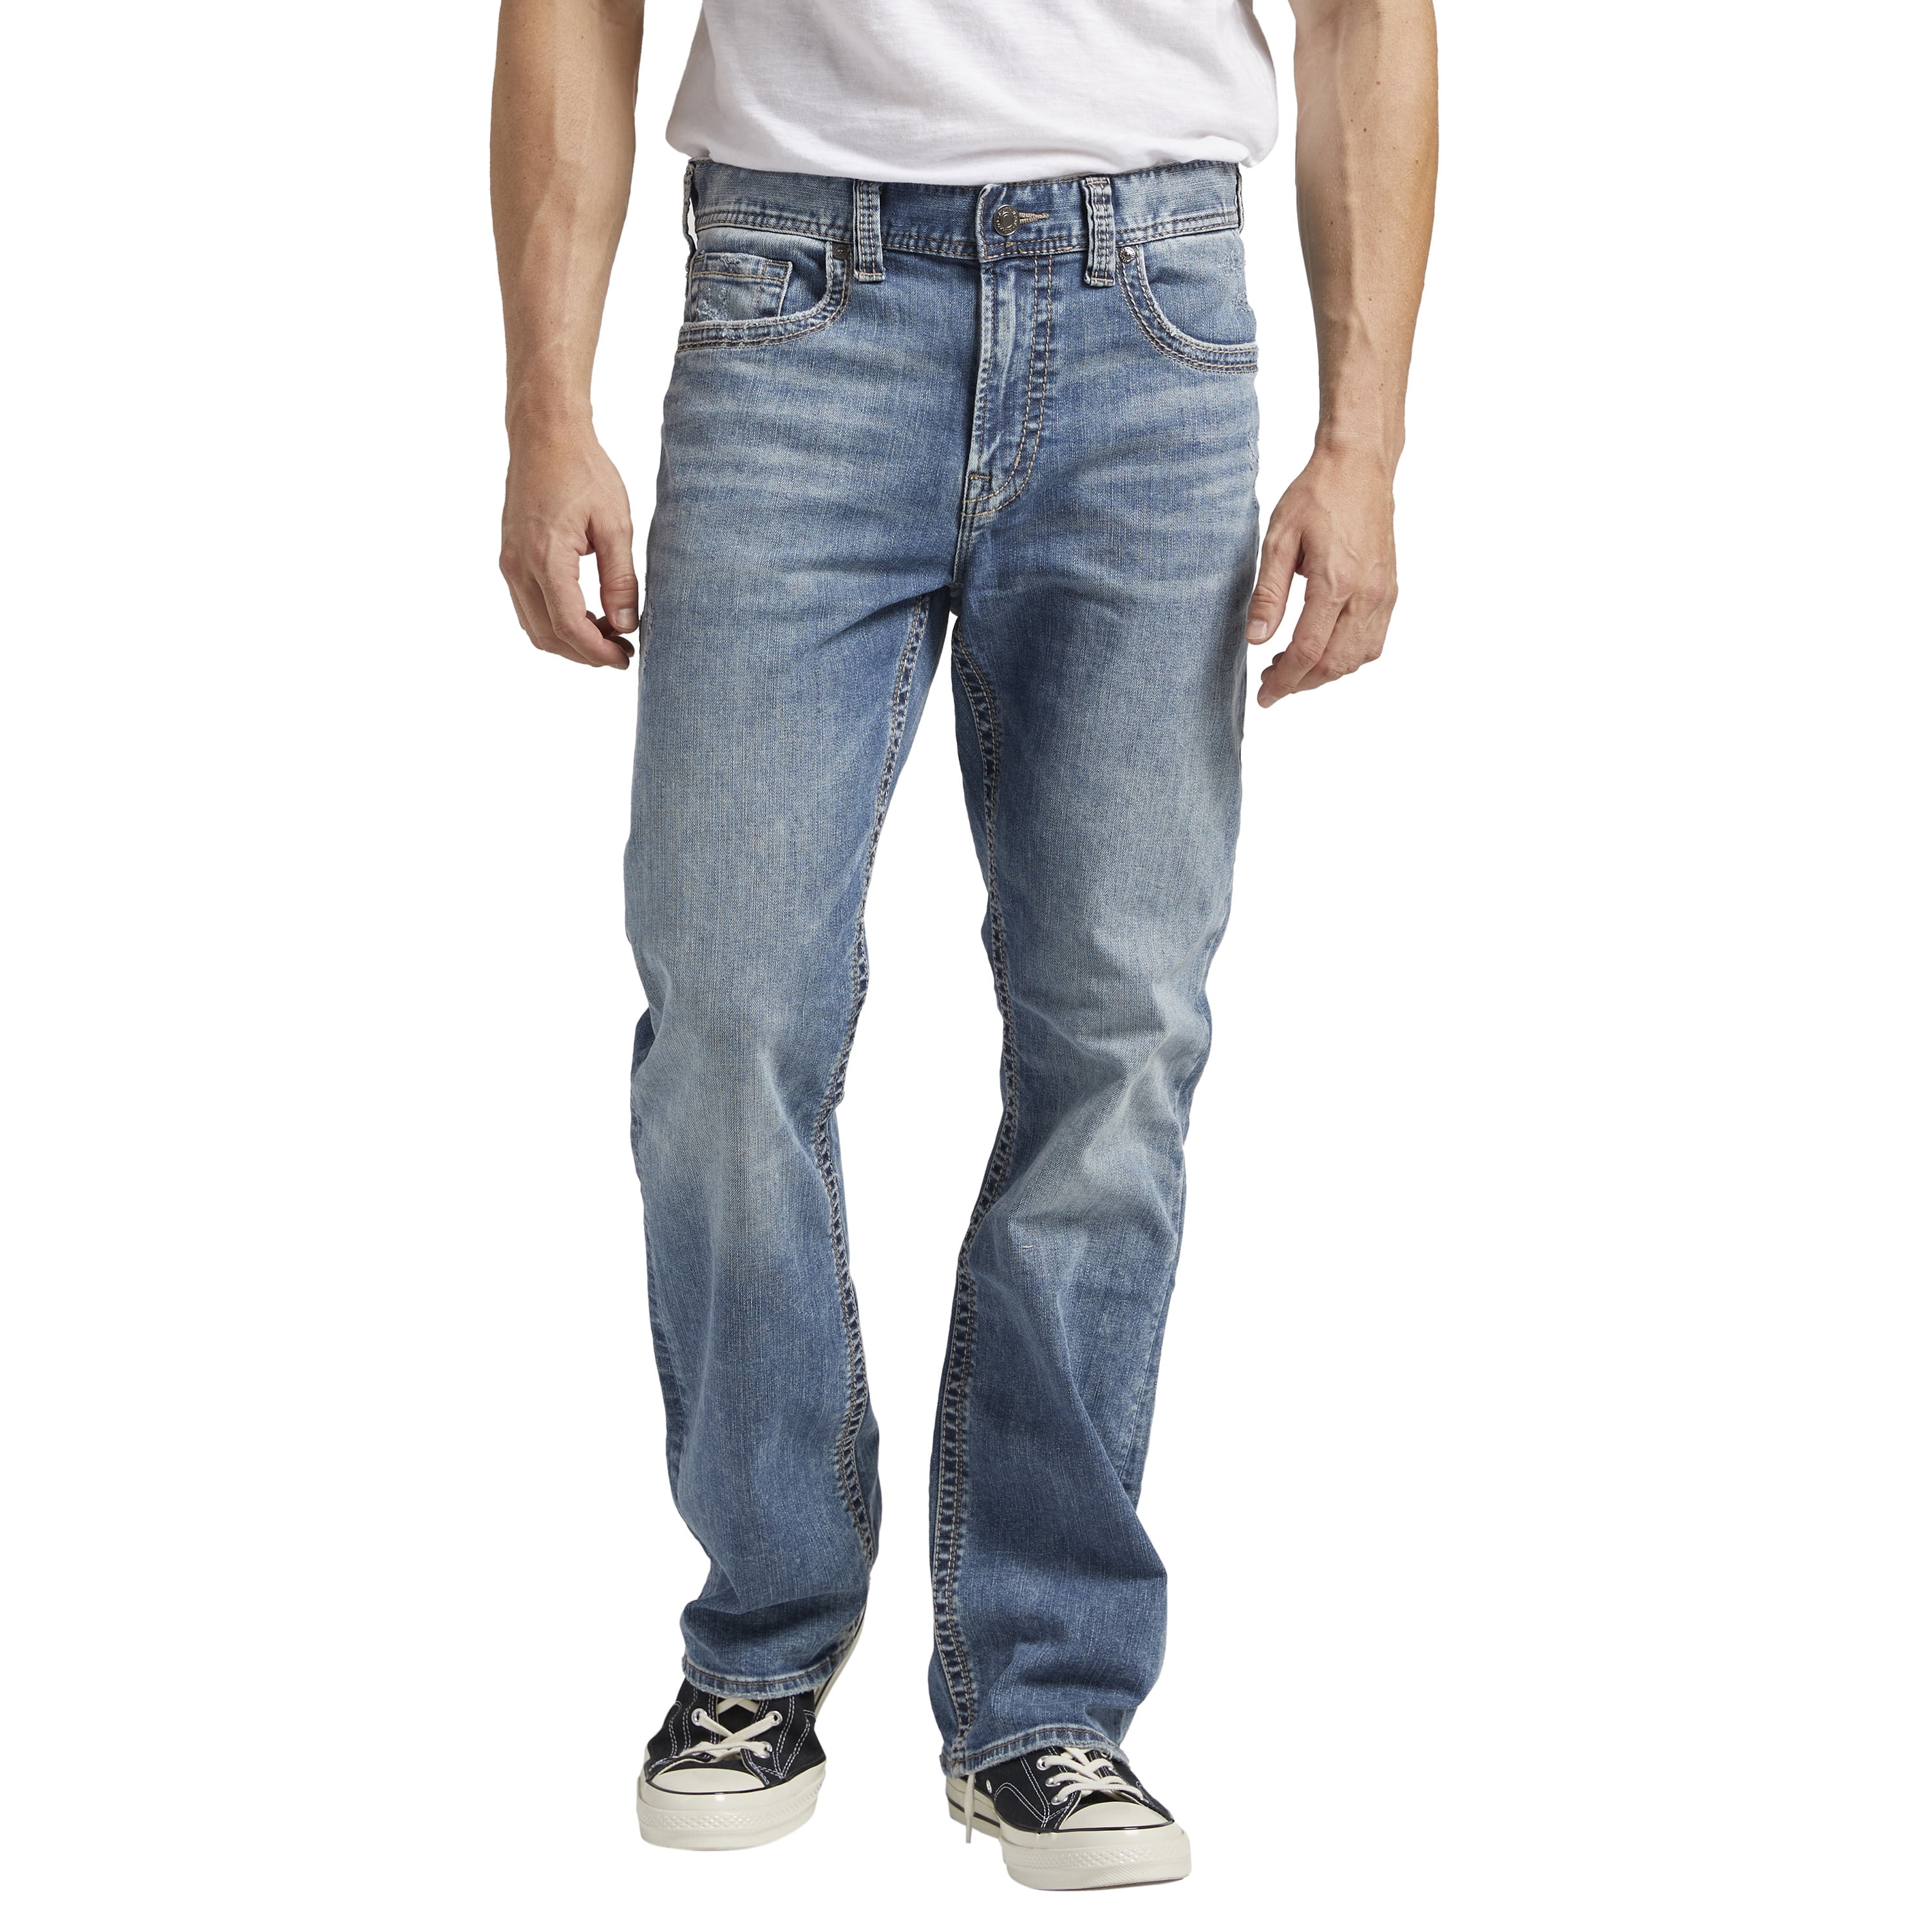 Silver Jeans Co. Men's Craig Easy Fit Bootcut Jeans, Waist Sizes 30-42 